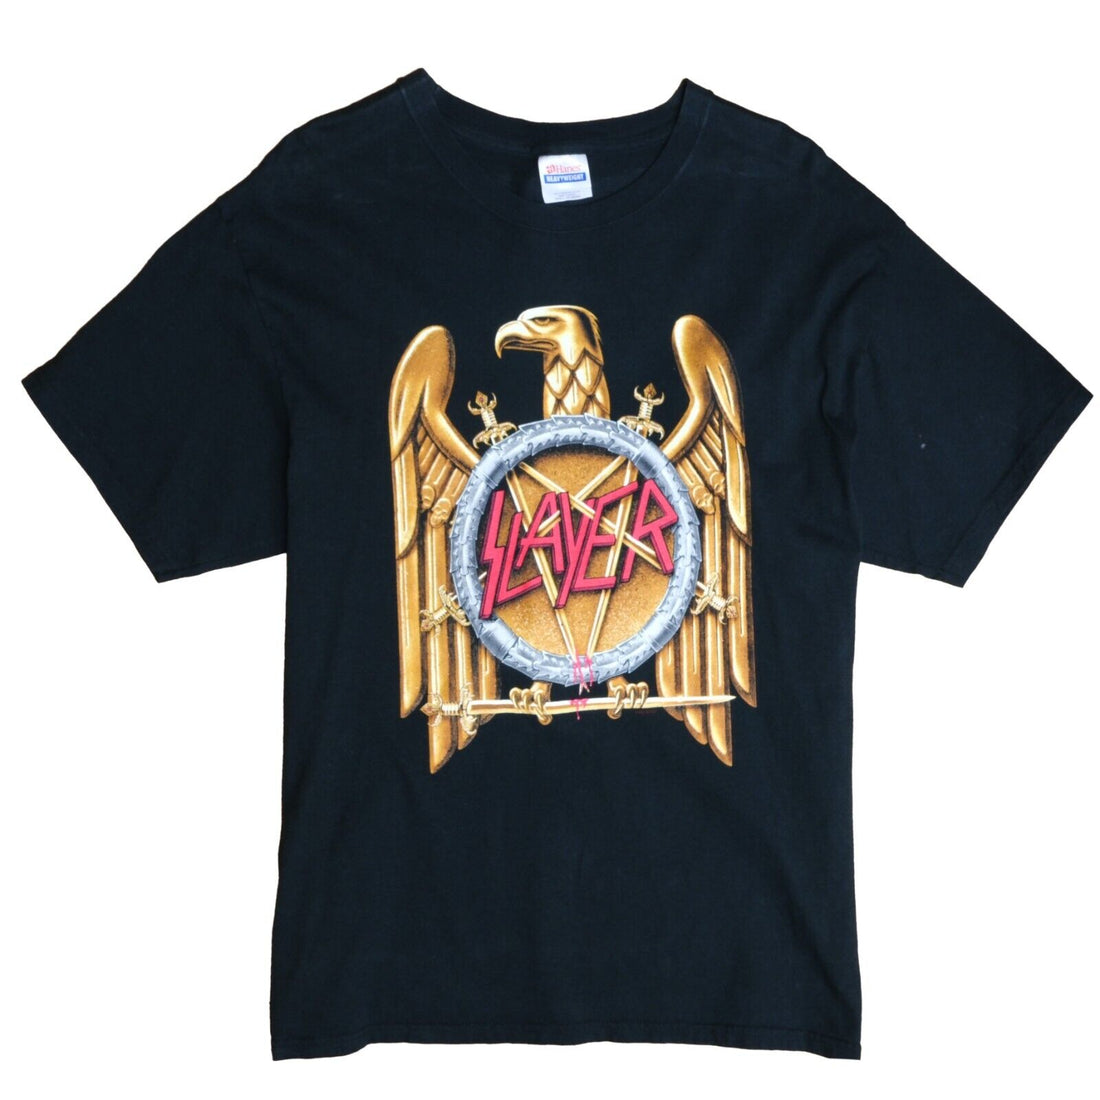 Vintage Slayer Tour T-Shirt Size Large Black Band Tee 2004